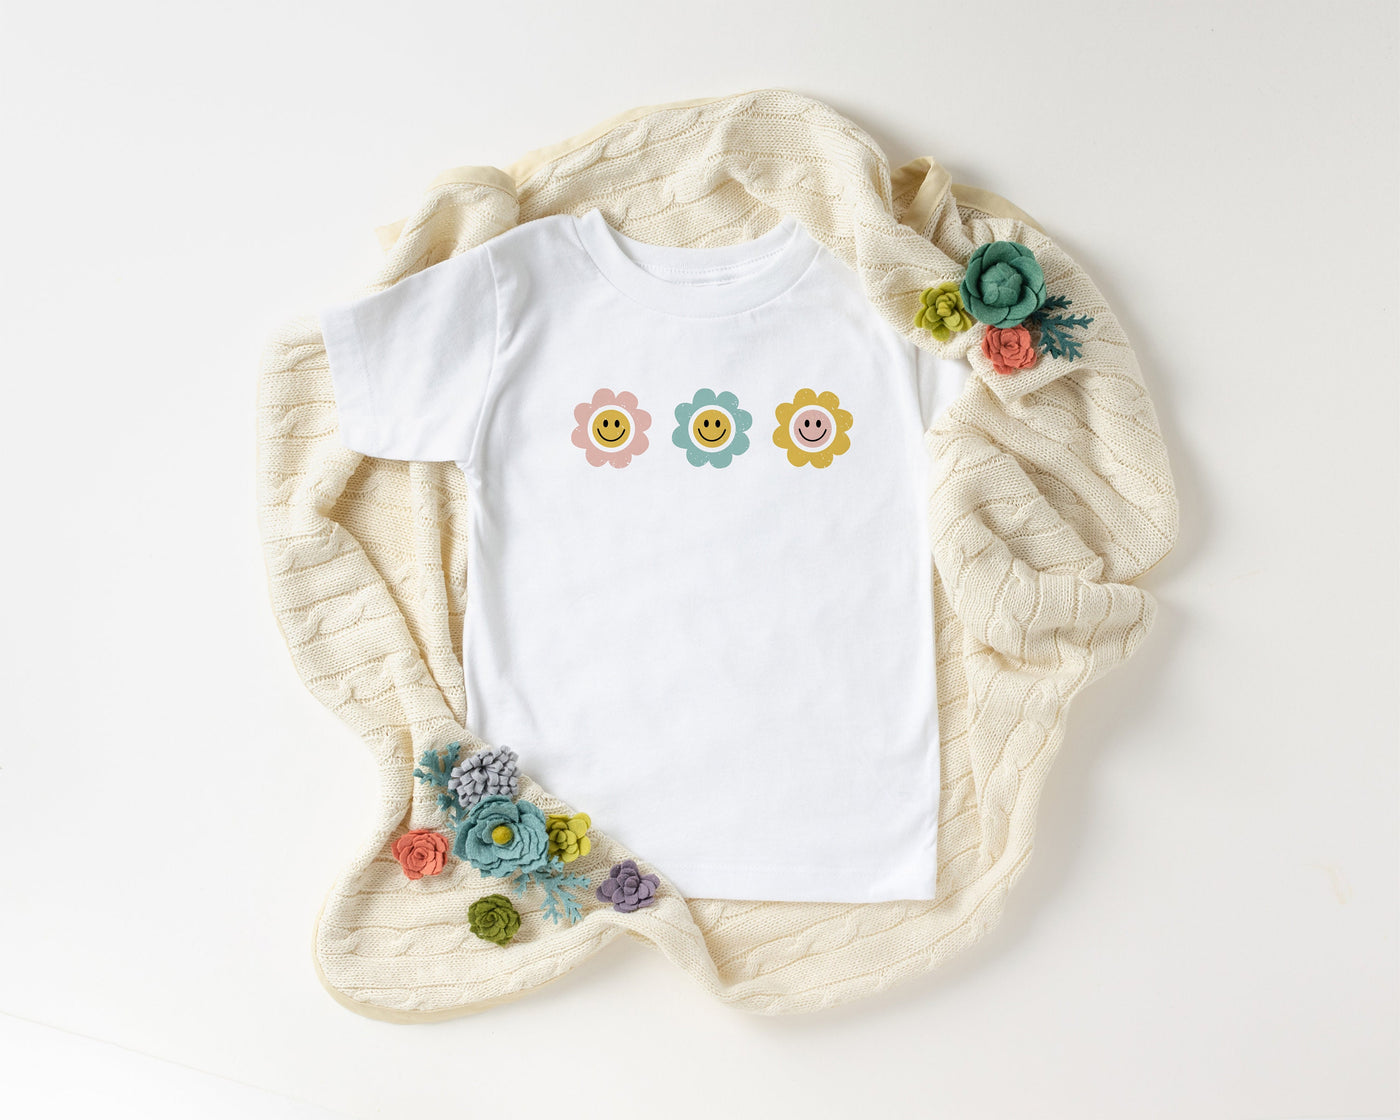 Floral Shirt Girl's, Hippie Flower Shirt, Smiley Flower Shirt, Smile Flower, Cute Flower Shirt Girls, Girl's Floral Shirt, Flower Hippie